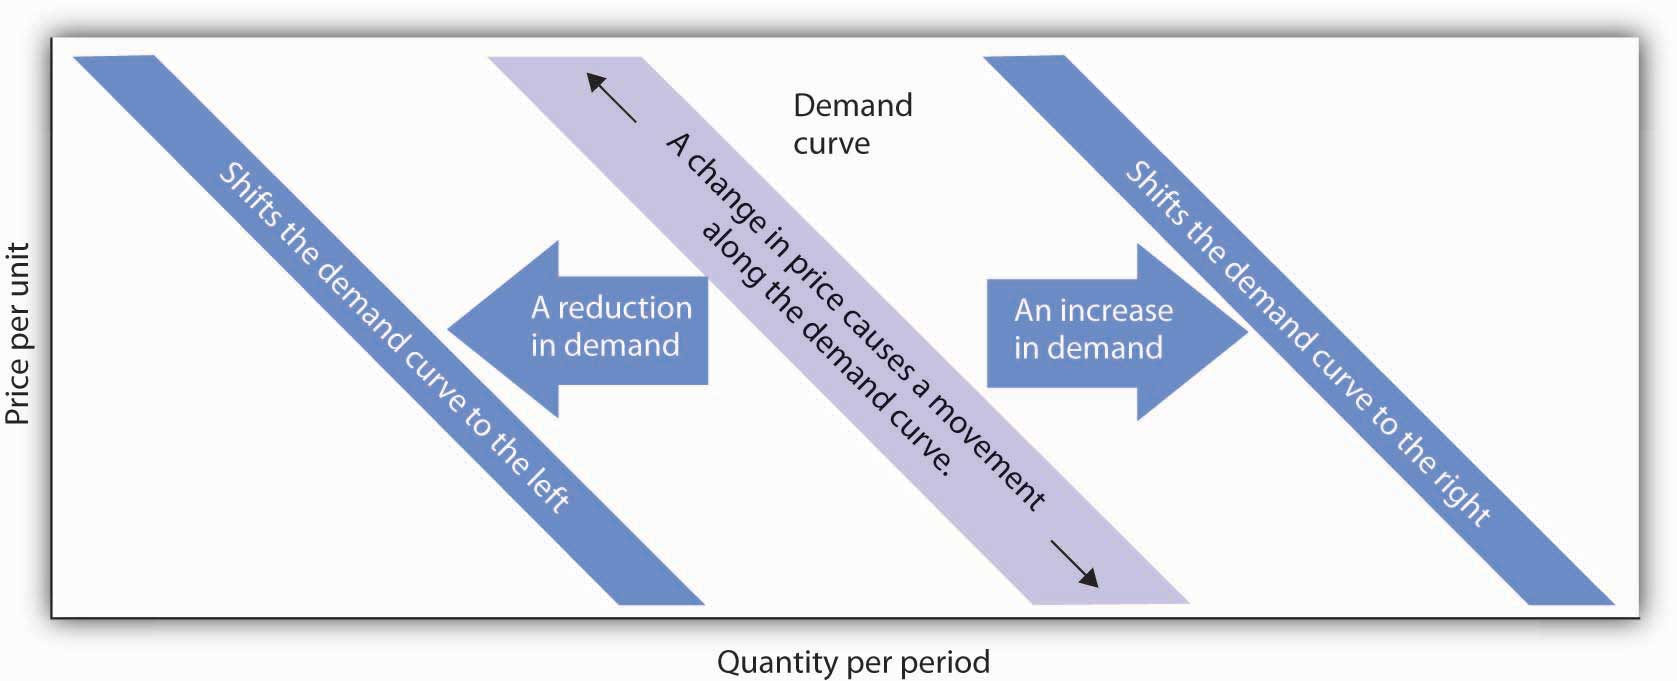 A demand curve